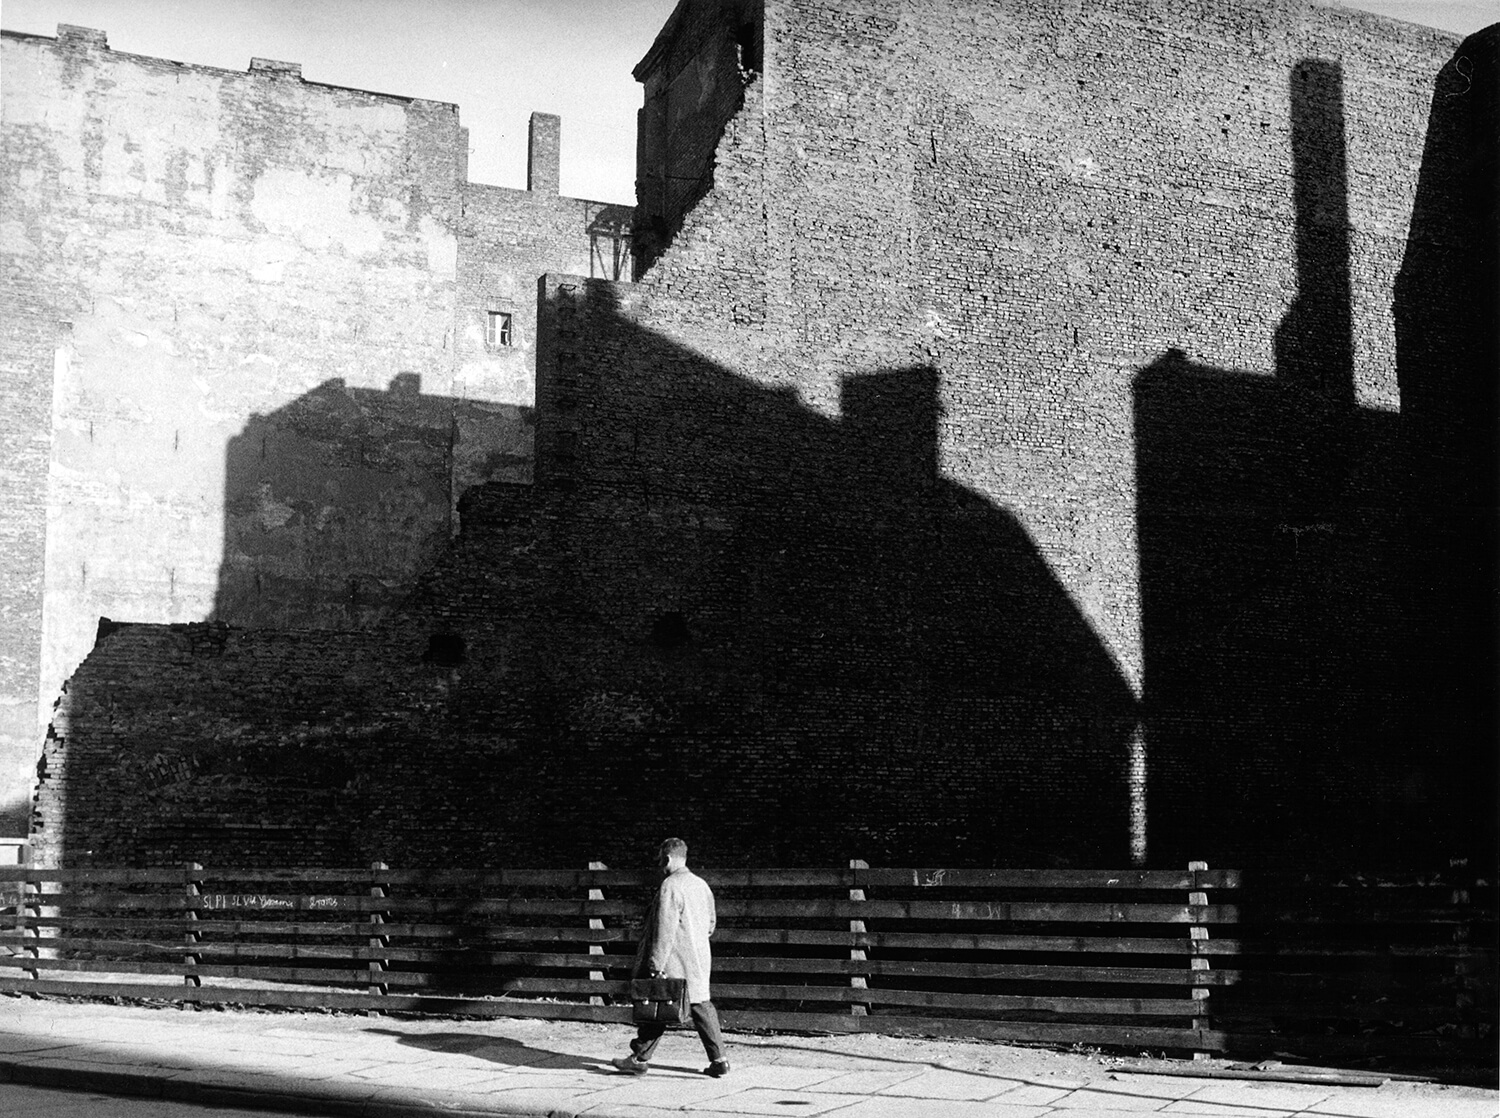 Bernard Larsson, Shadows of houses on firewalls, Ost-Berlin, 1962, gelatin silver print on baryta paper, vintage print